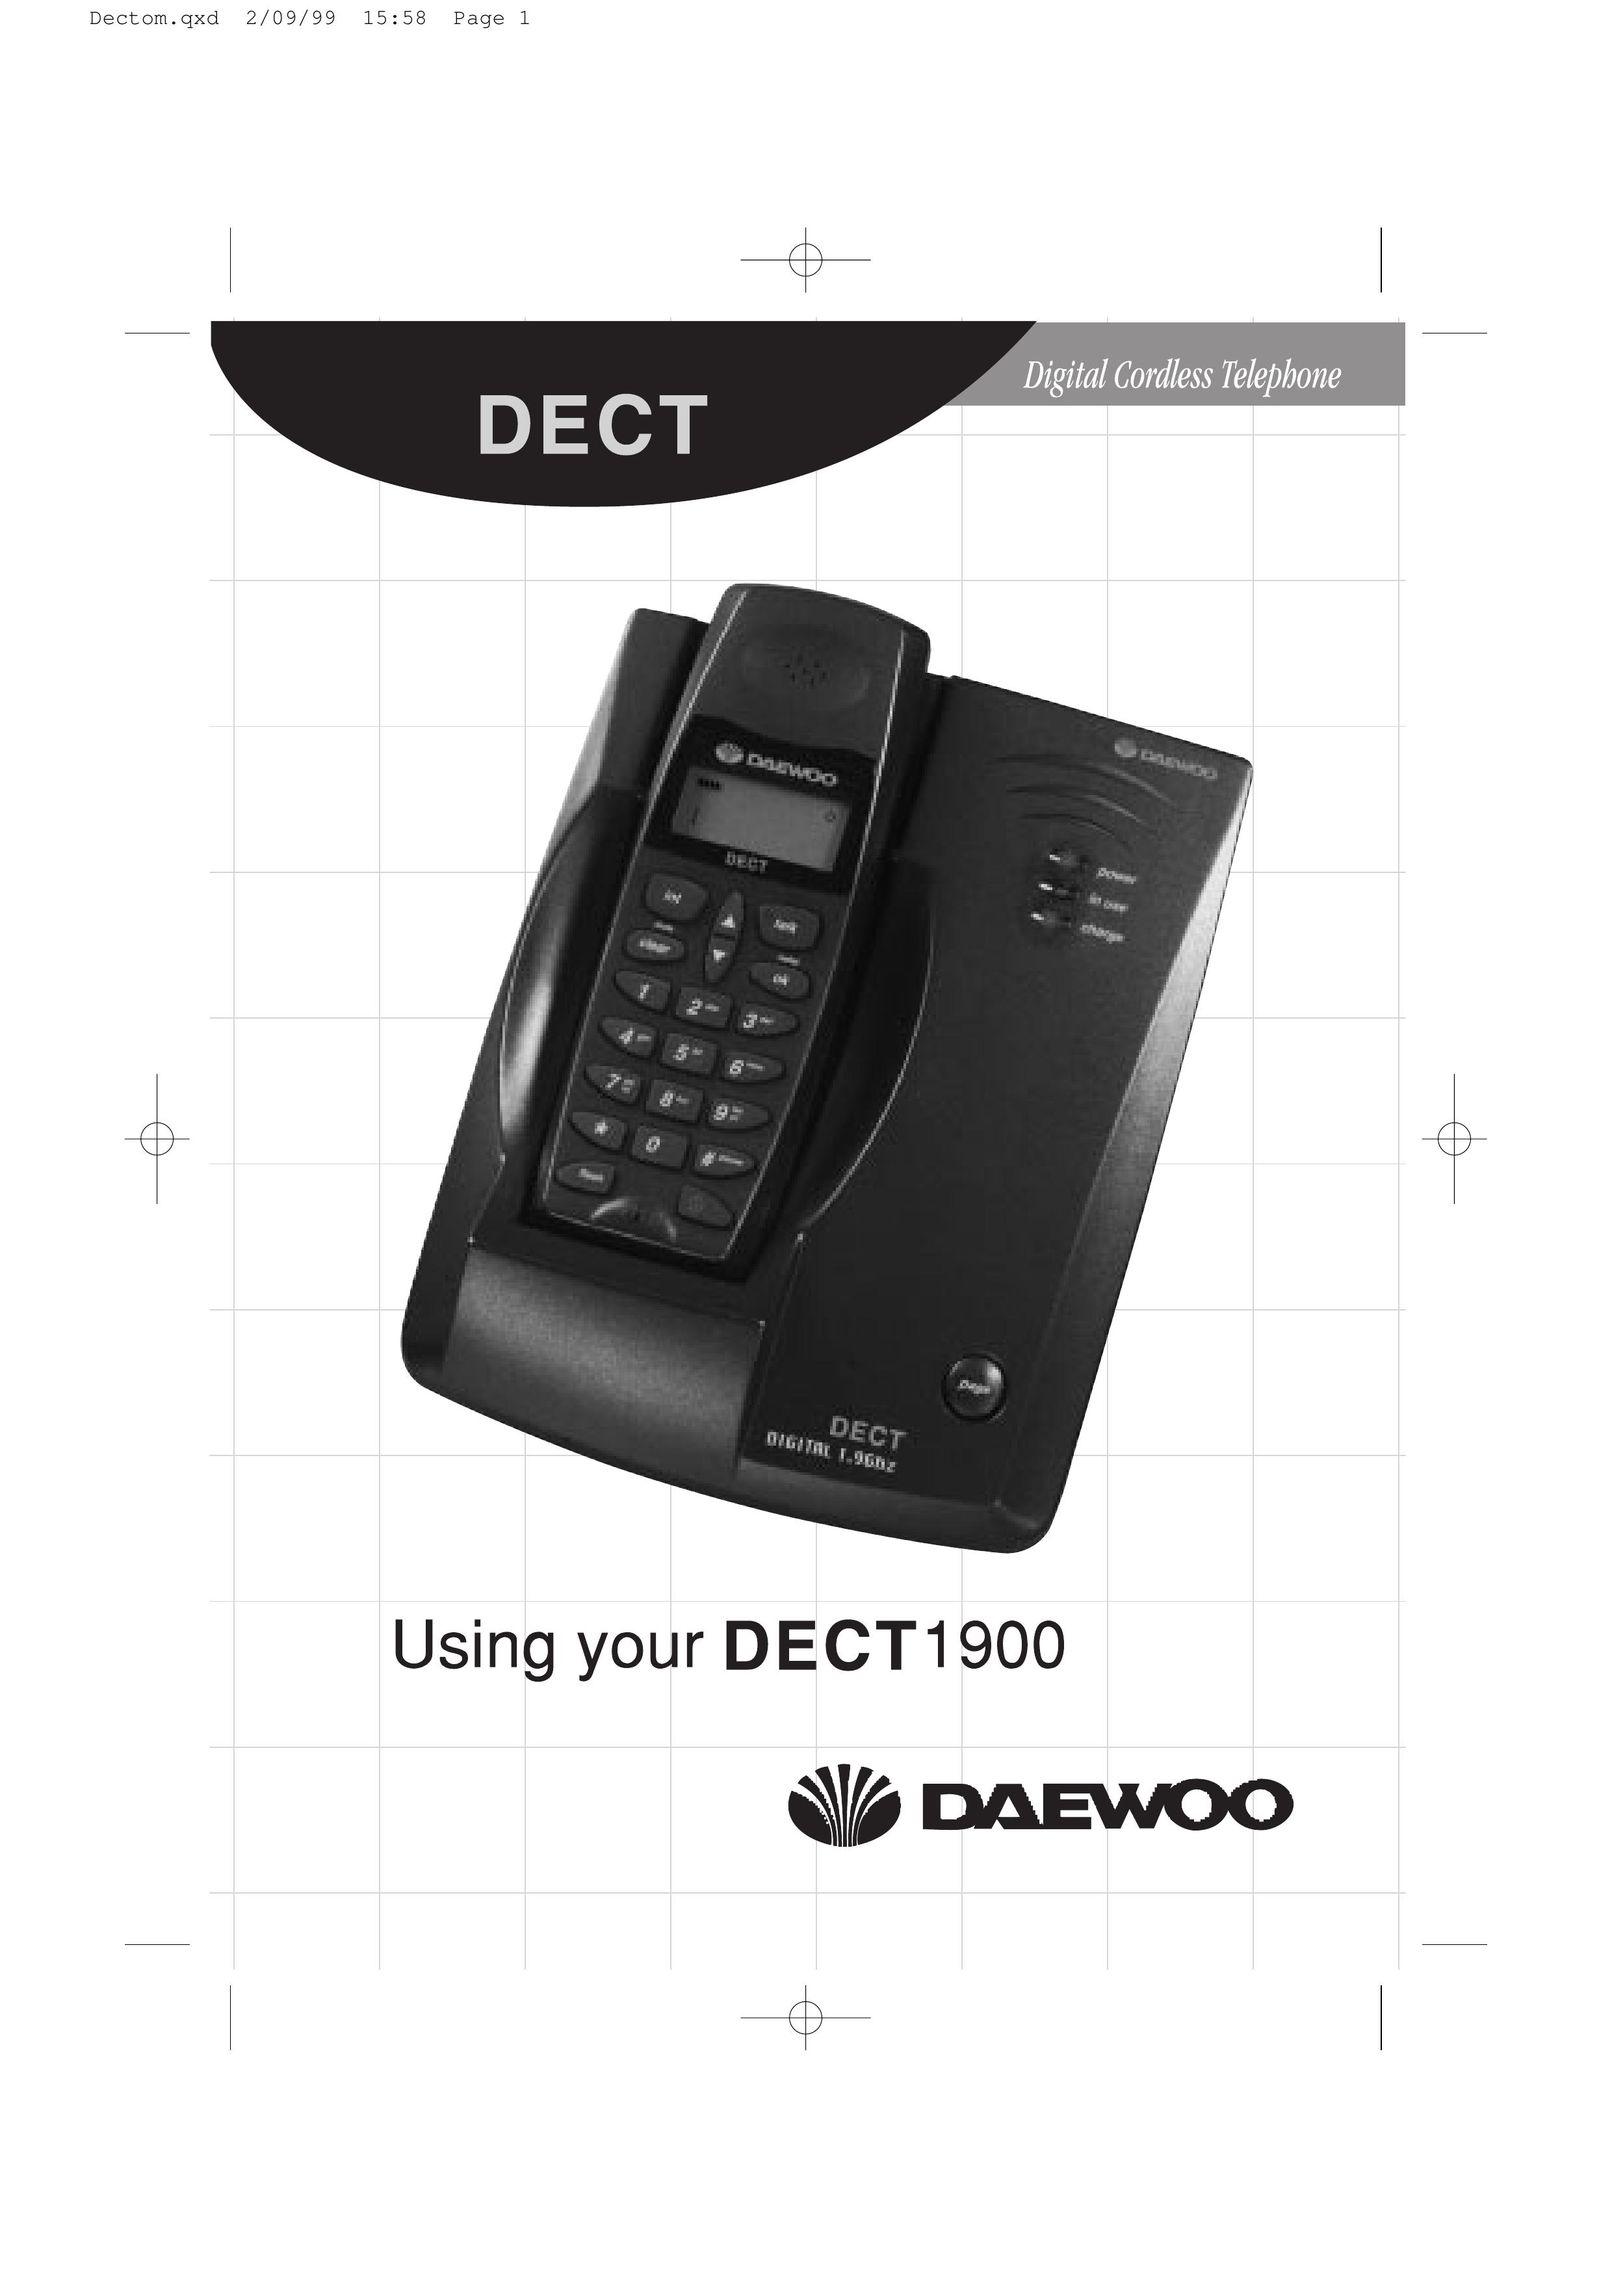 Daewoo DECT 1900 Cordless Telephone User Manual